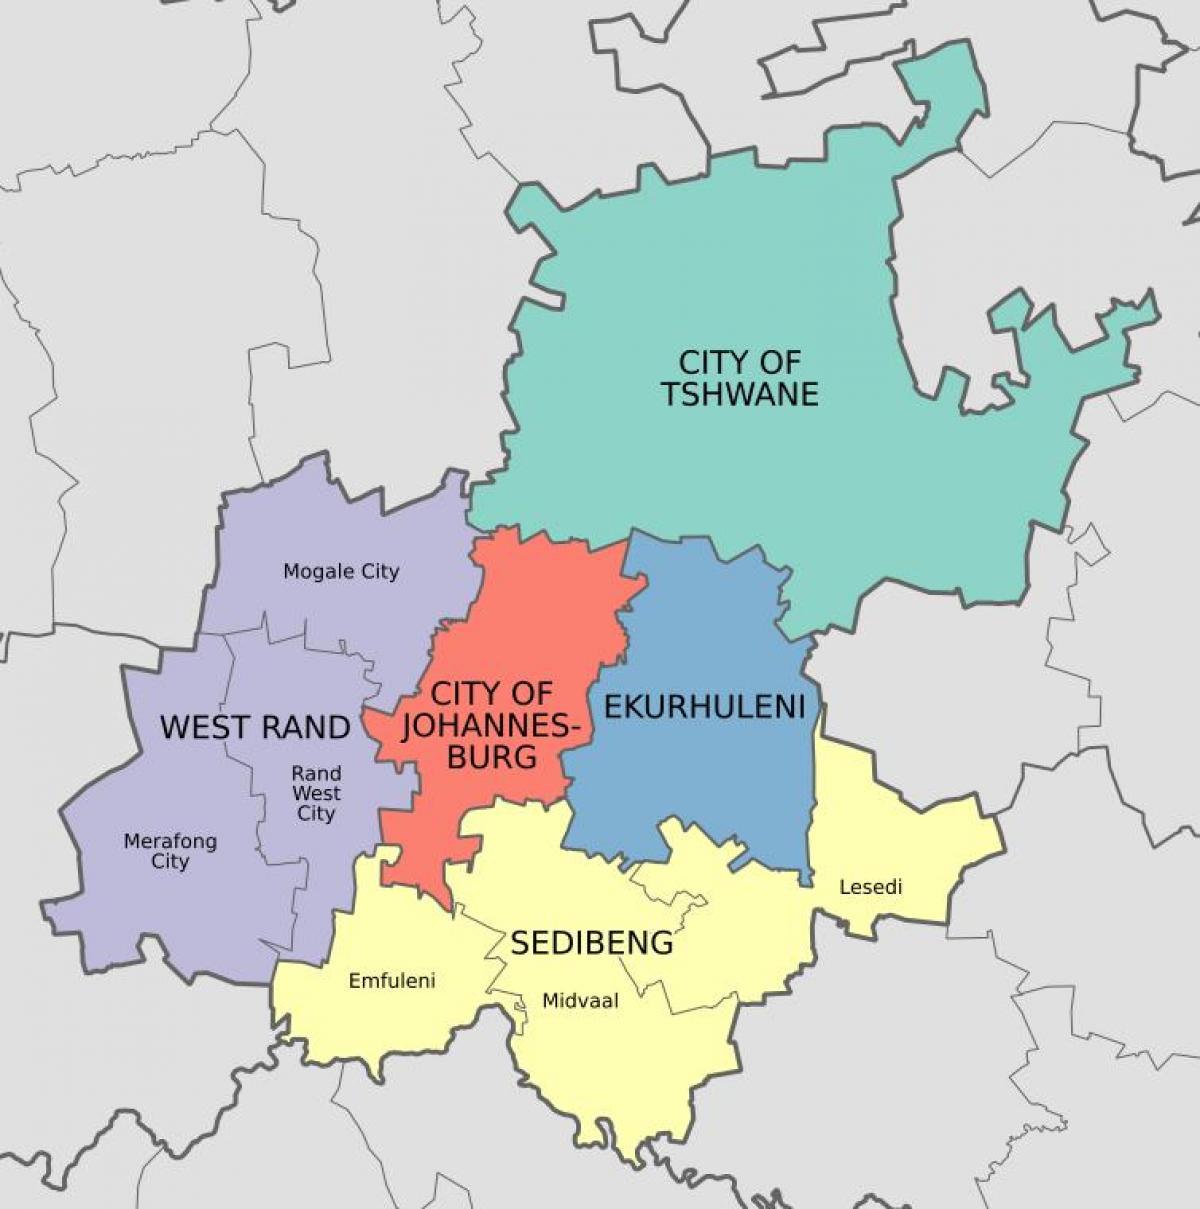 Plan districts Johannesburg (Joburg Jozi)